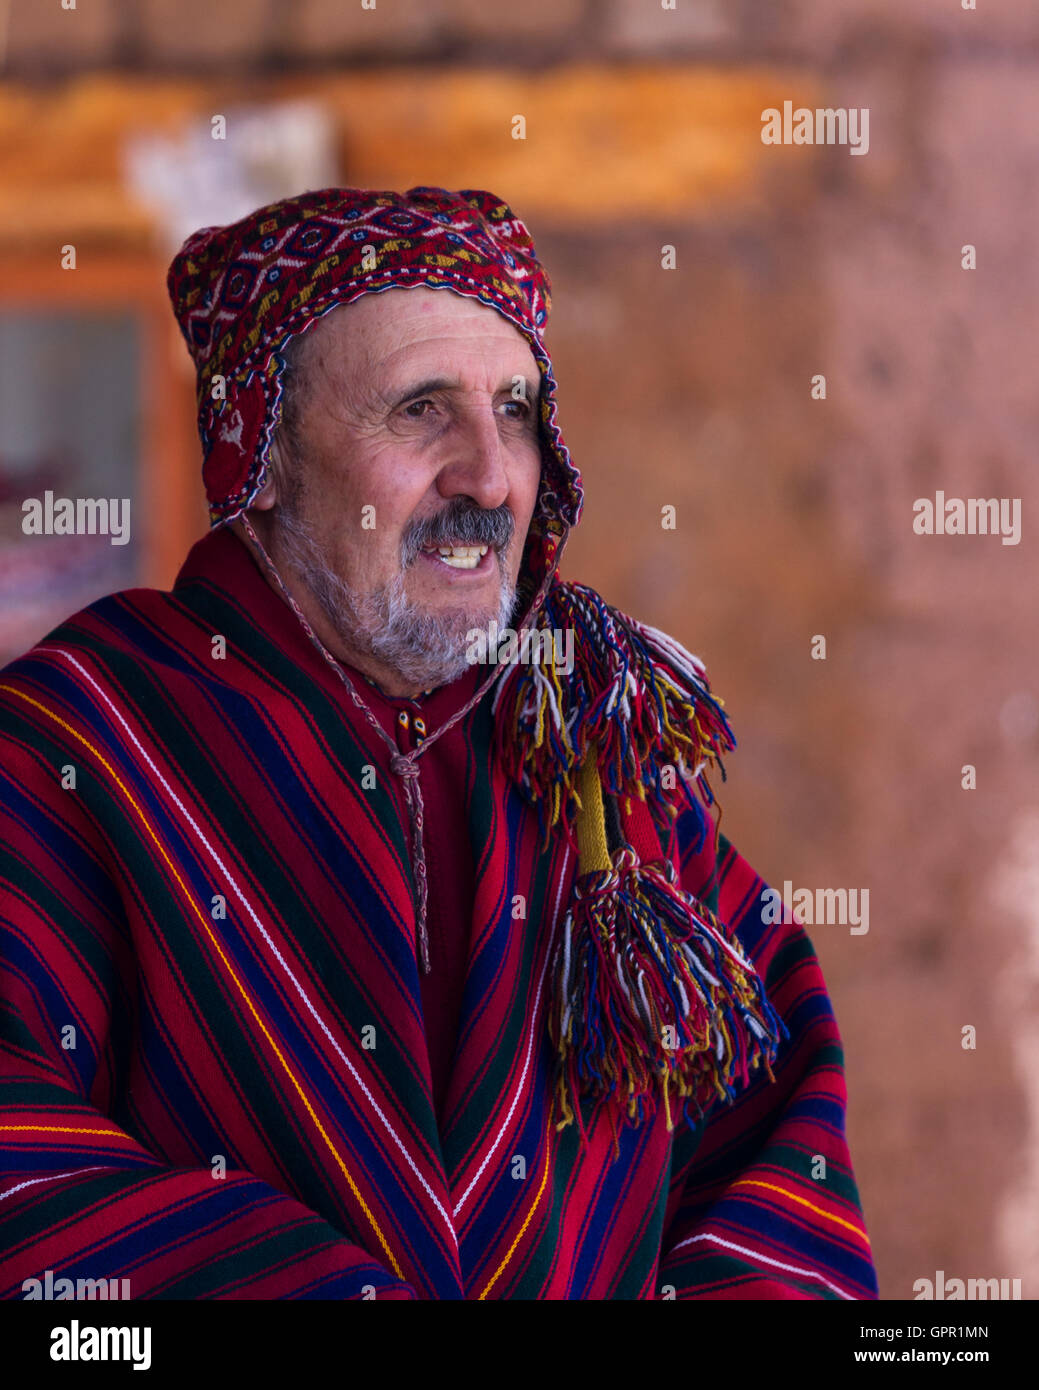 Chinchero Peru -May 18 : Peruvian man wearing traditional colorful clothing. May 18 2016, Chinchero Peru. Stock Photo